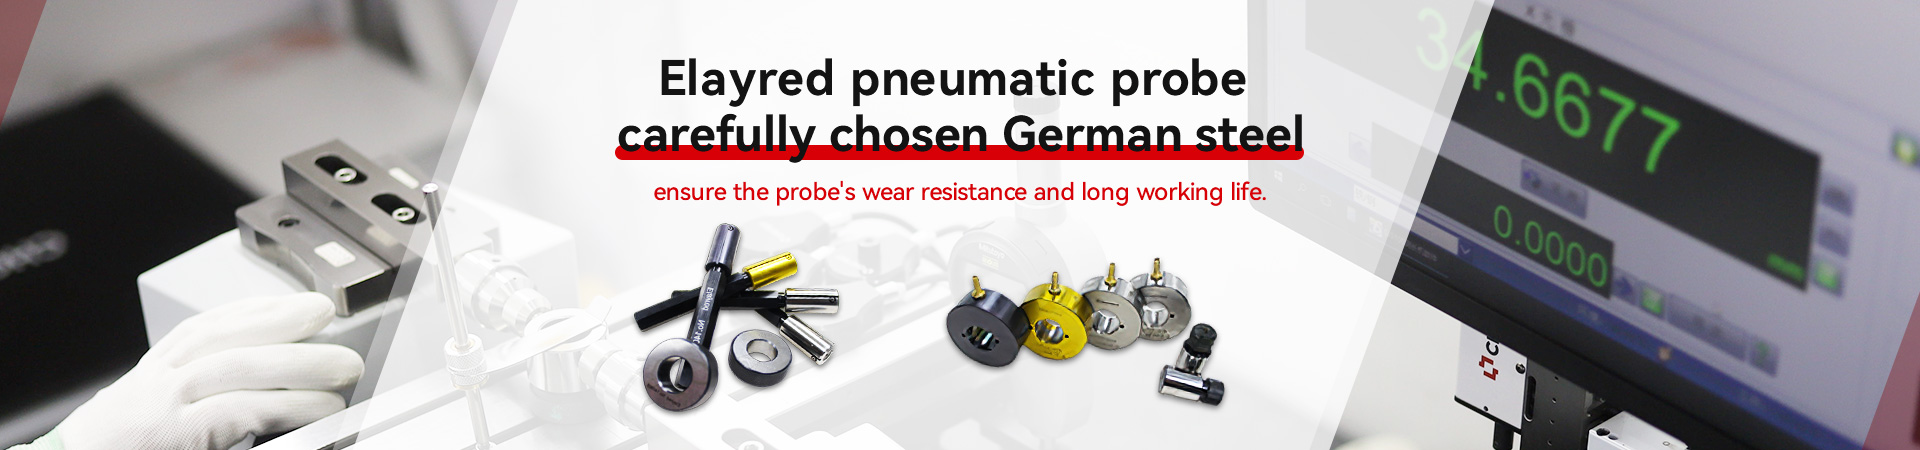 Elayred pneumatic probe carefully chosen German steel